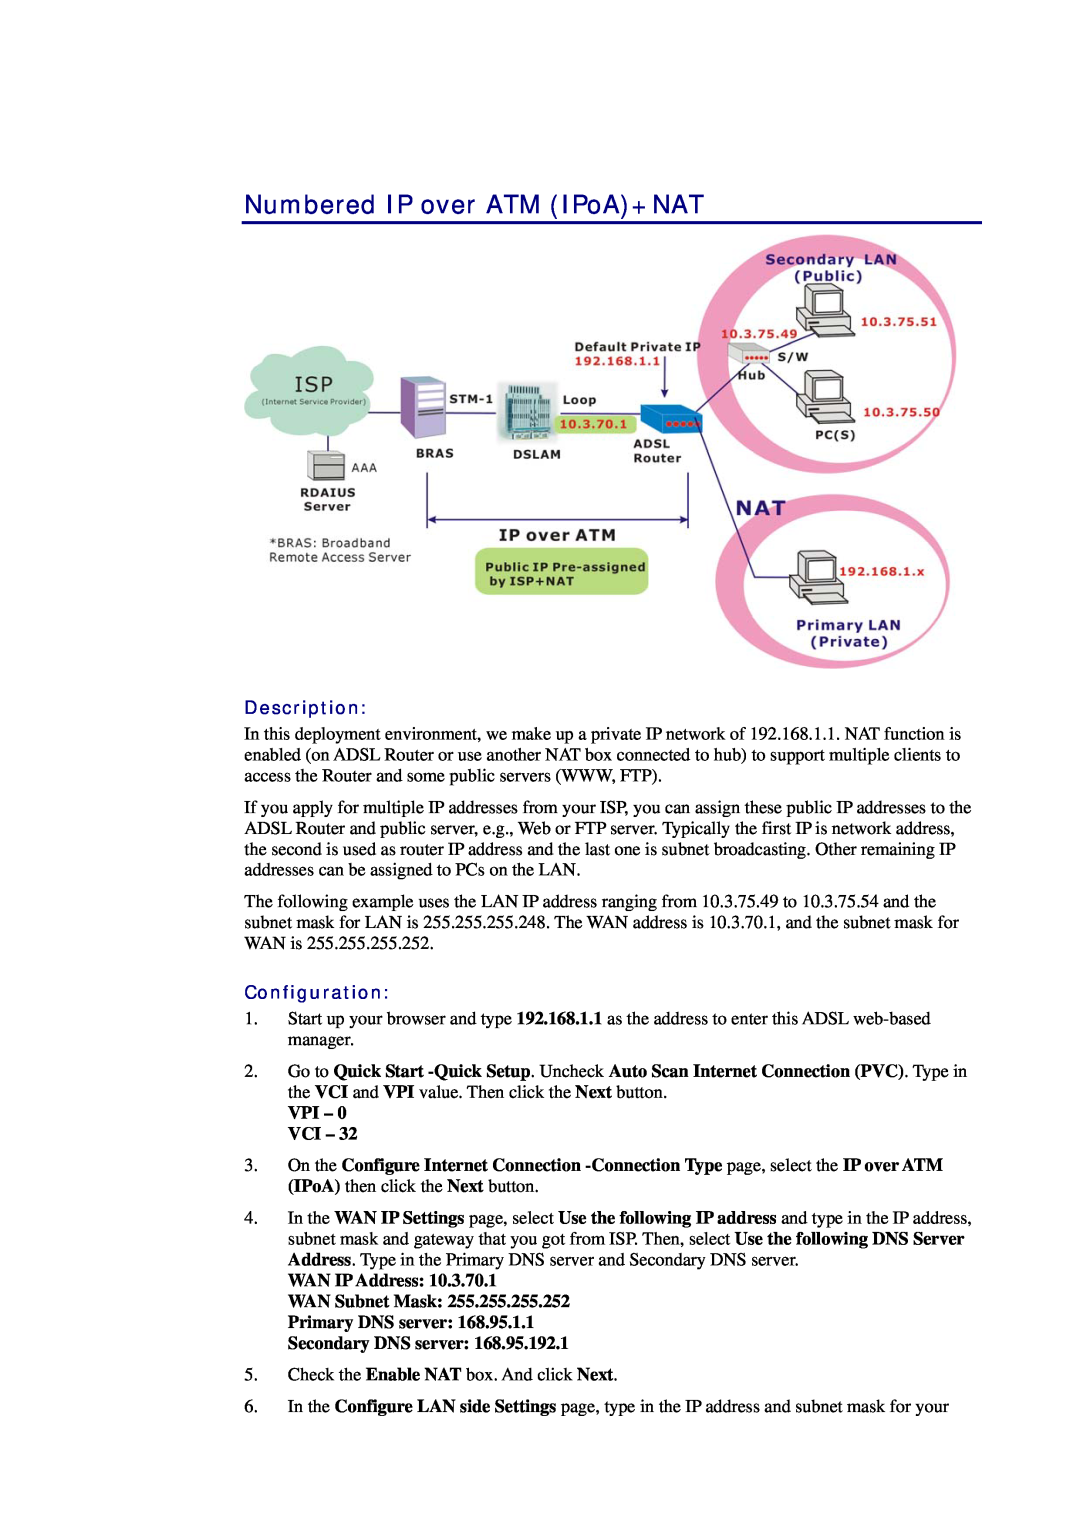 Siemens CL-010-I manual Numbered IP over ATM IPoA+NAT, Description, Configuration, VPI - 0 VCI, Secondary DNS server 